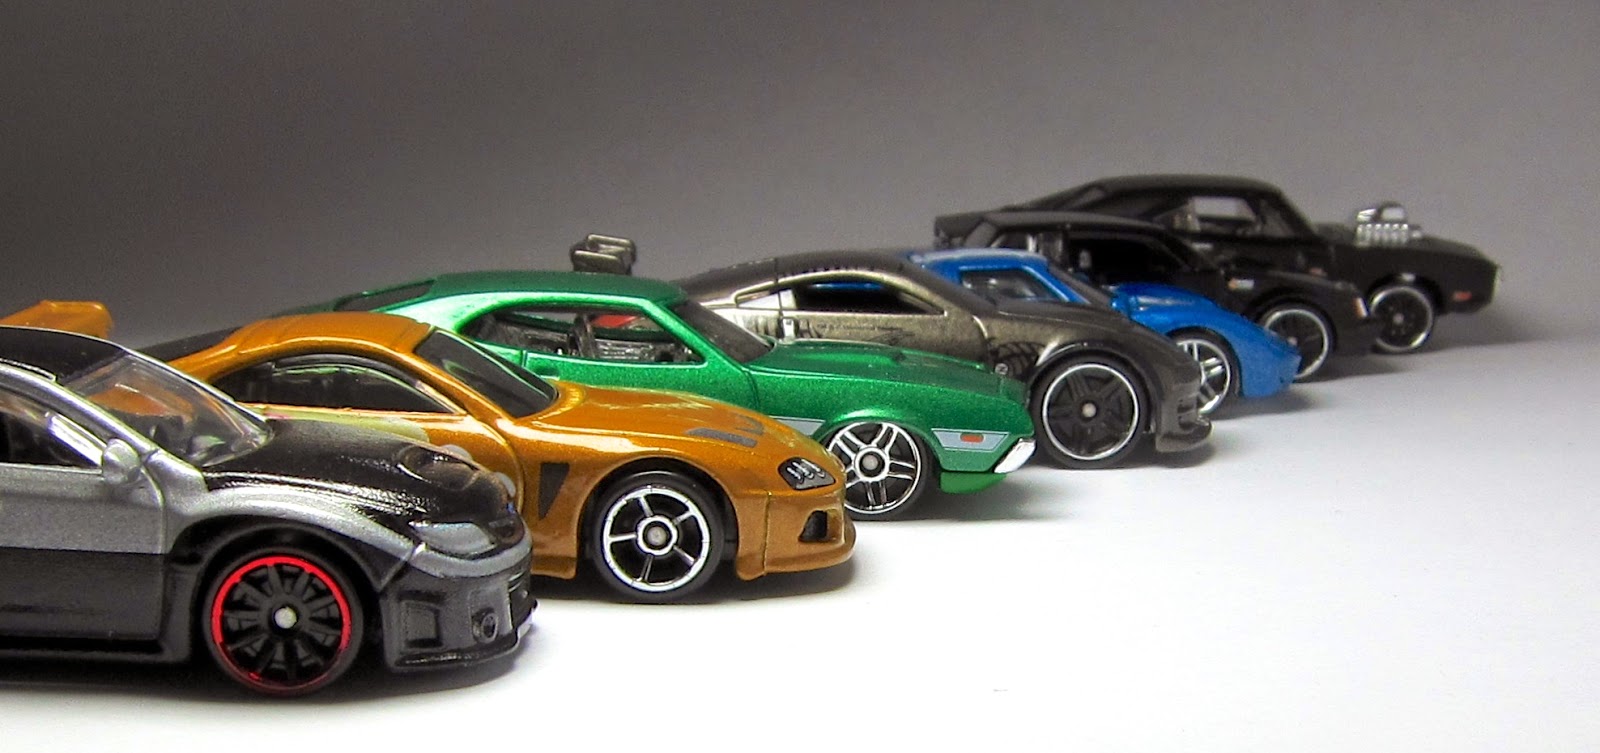 First Look: Hot Wheels 2015 Fast & Furious set..., AUTOCAR REGENERATION...